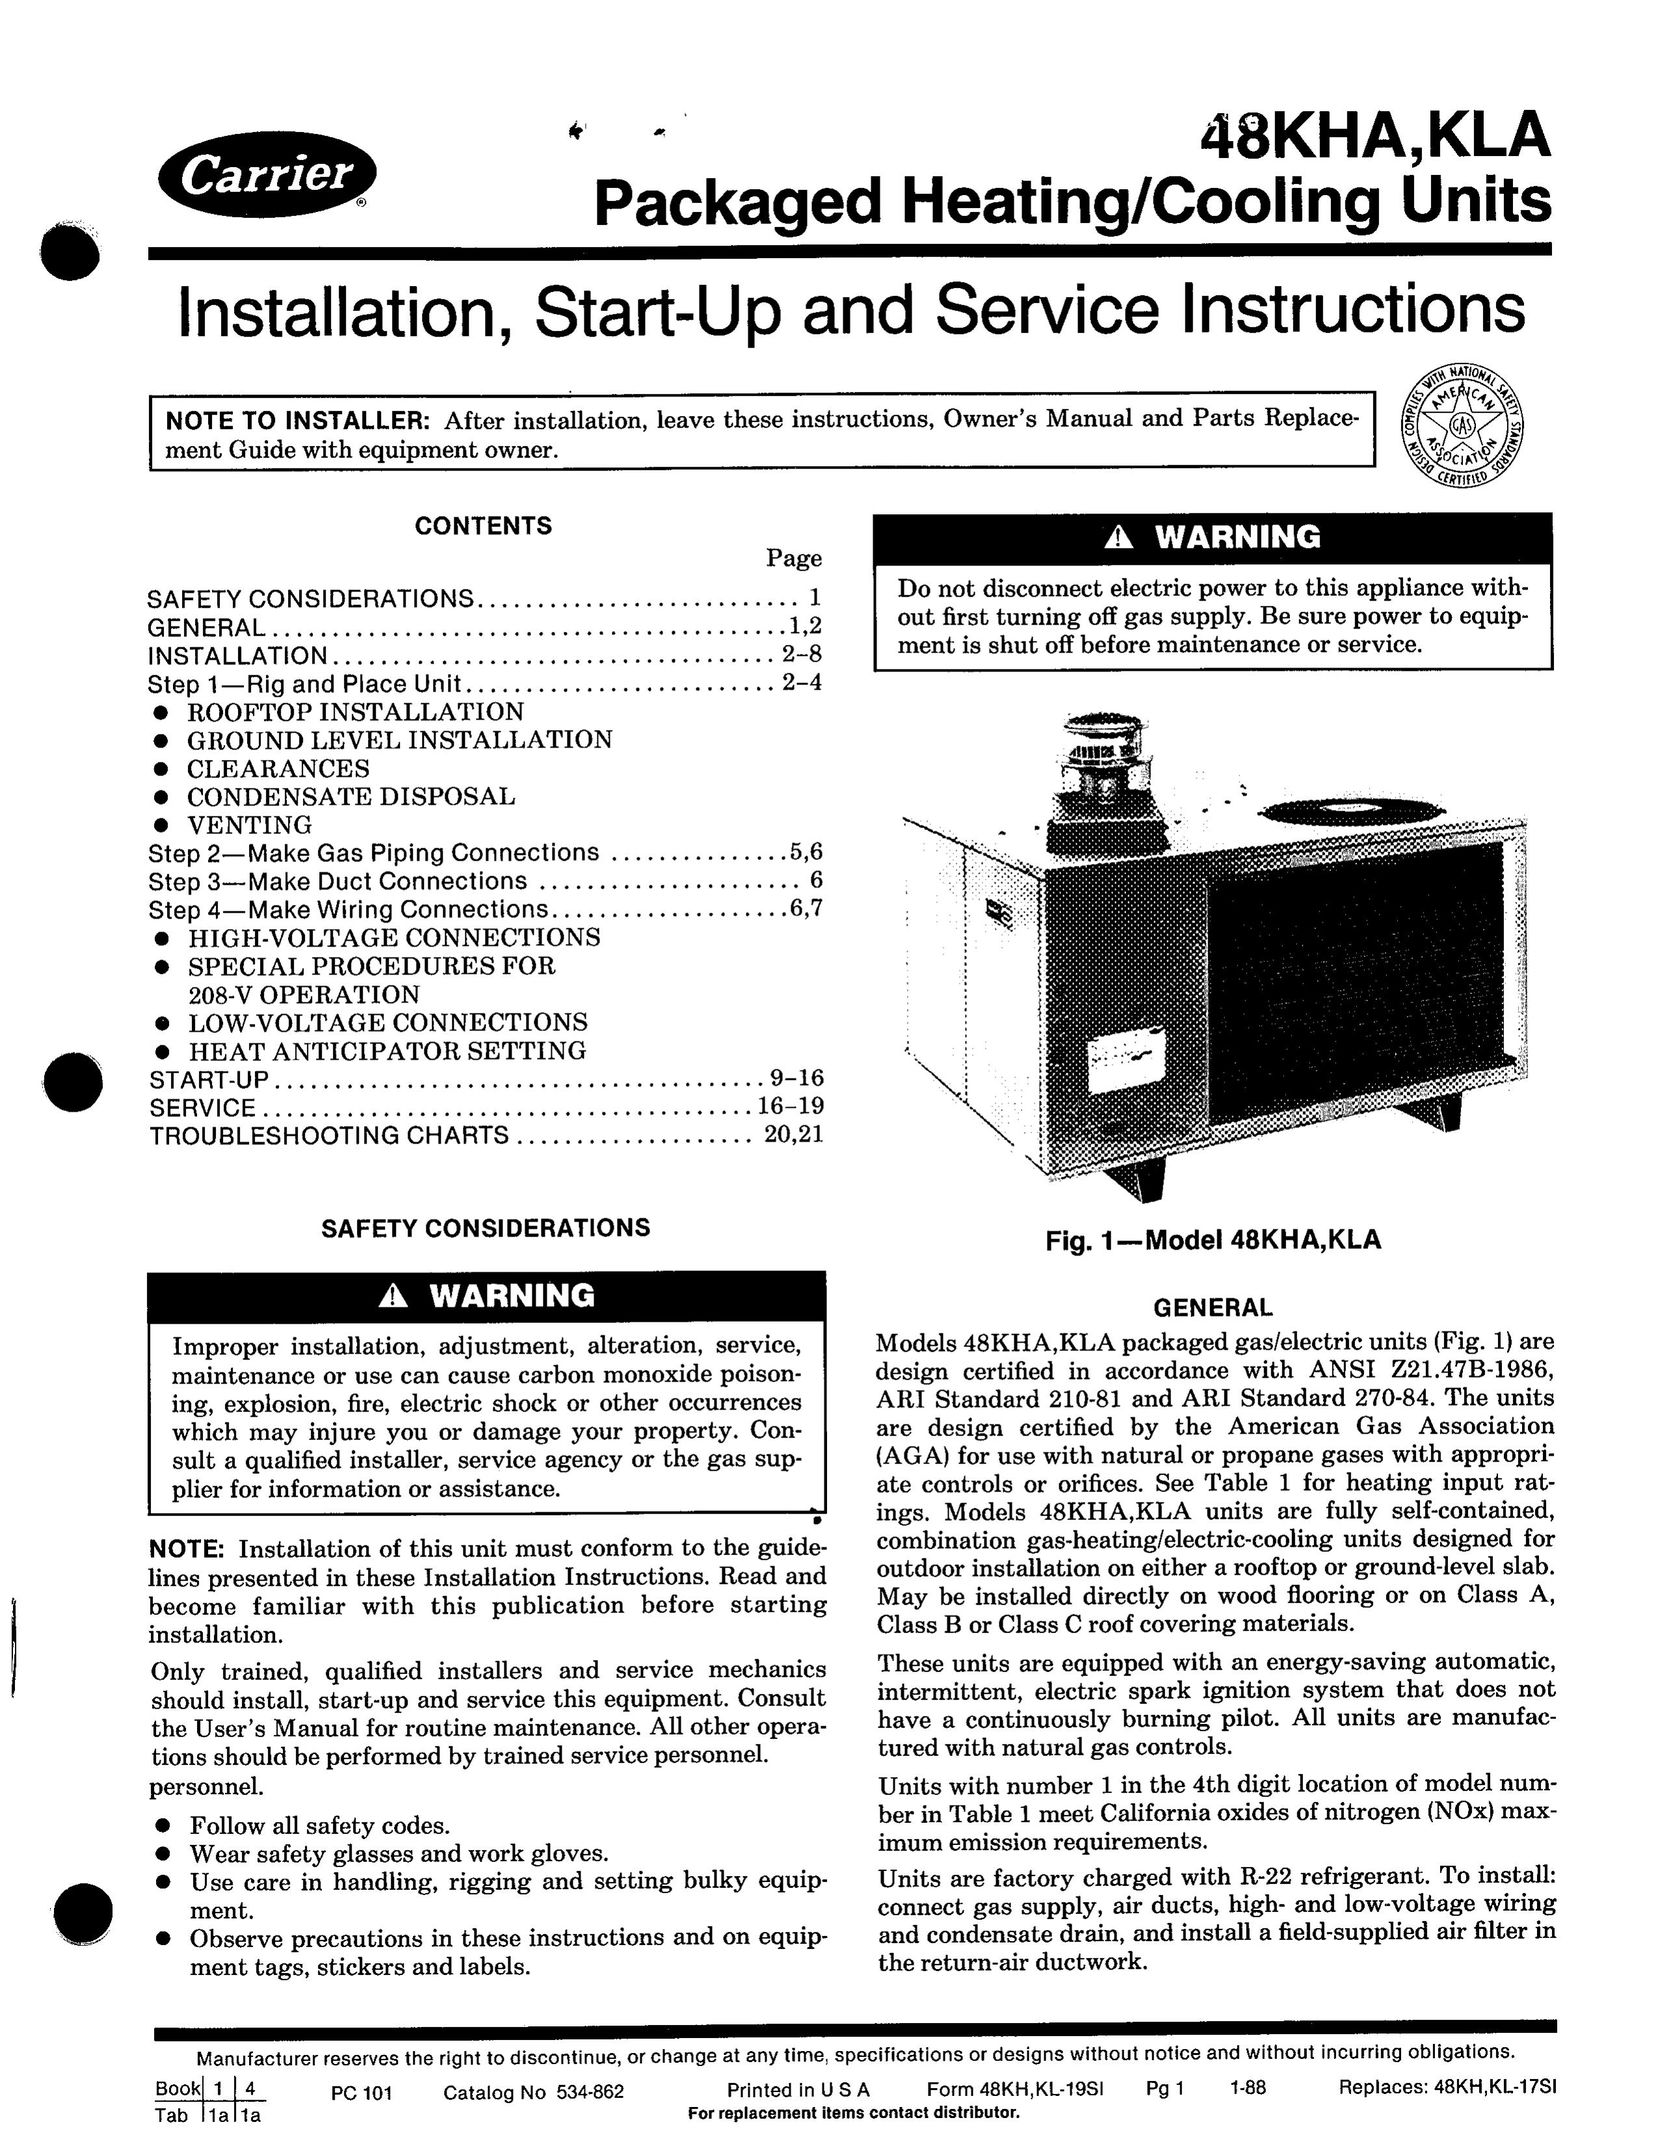 Carrier 48KHA Stove User Manual